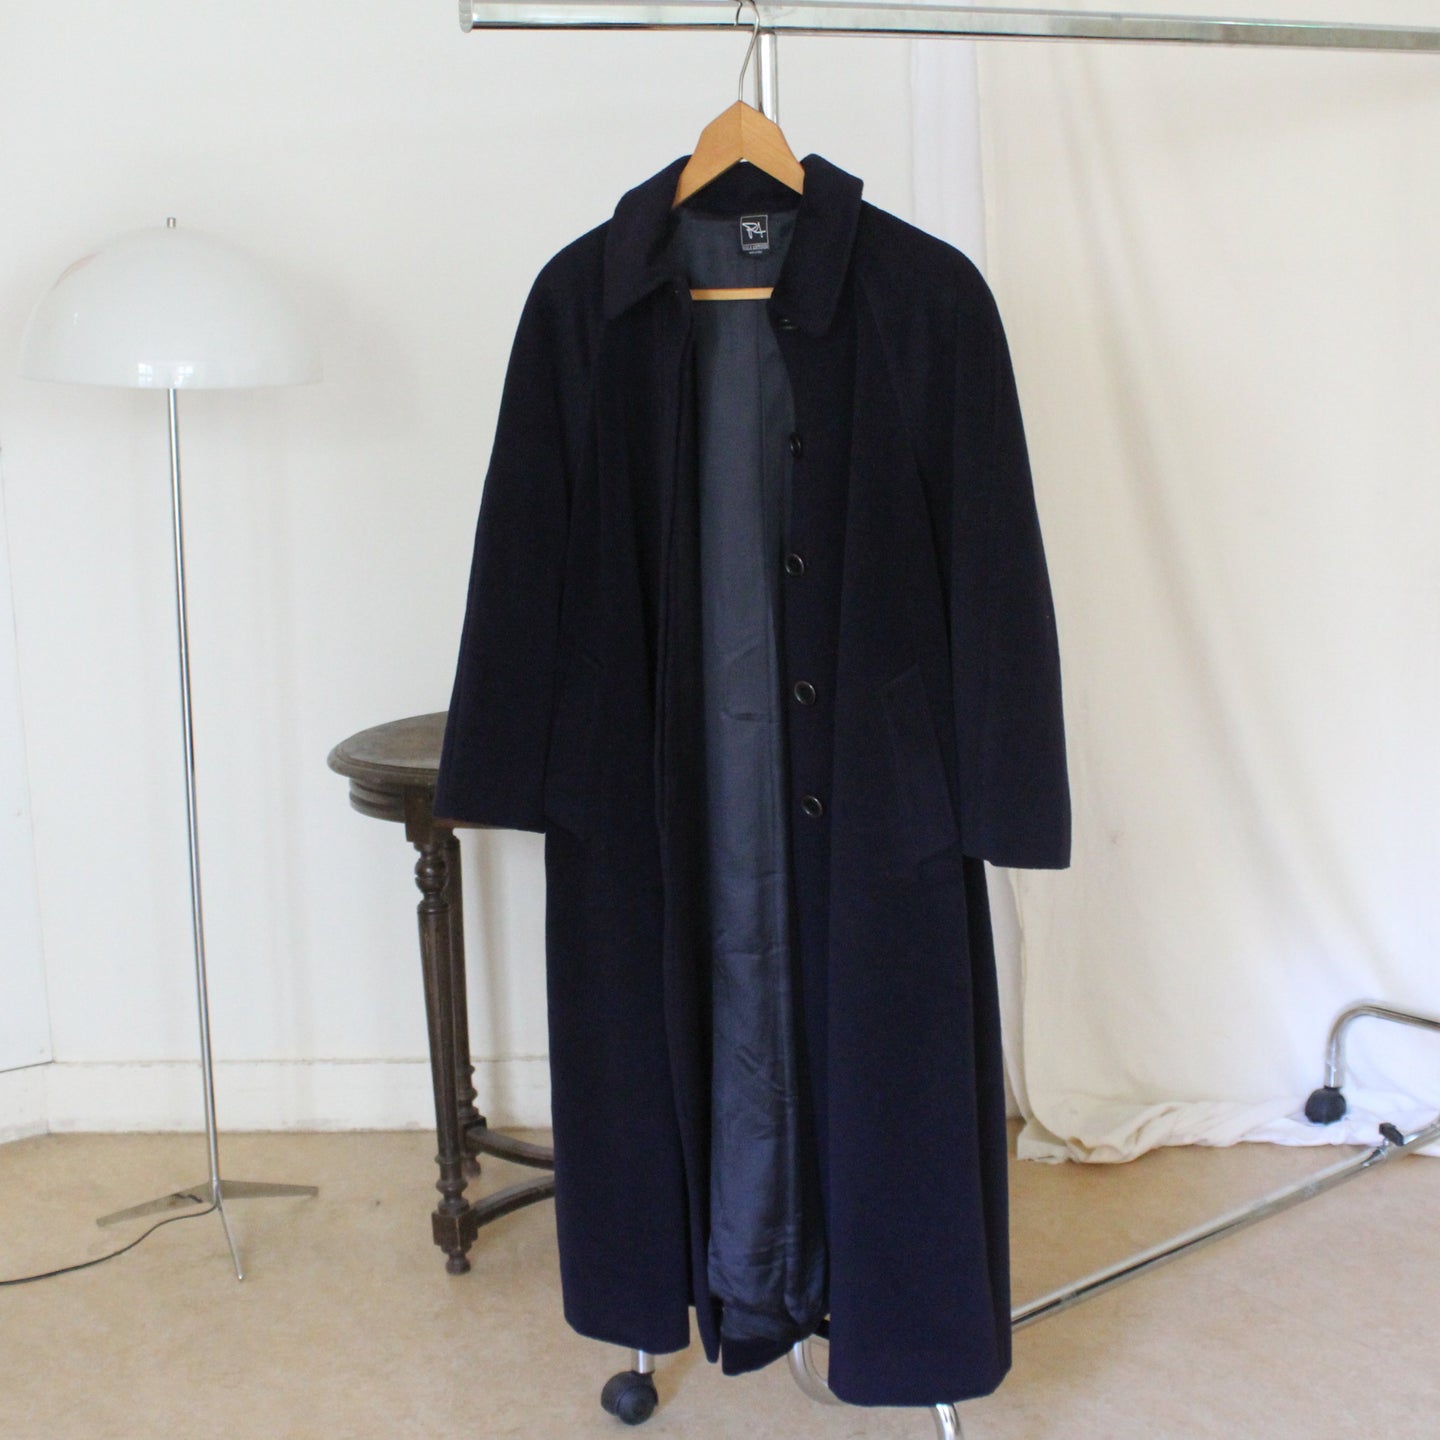 ON HOLD - Vintage dark blue heavy wool coat, size M